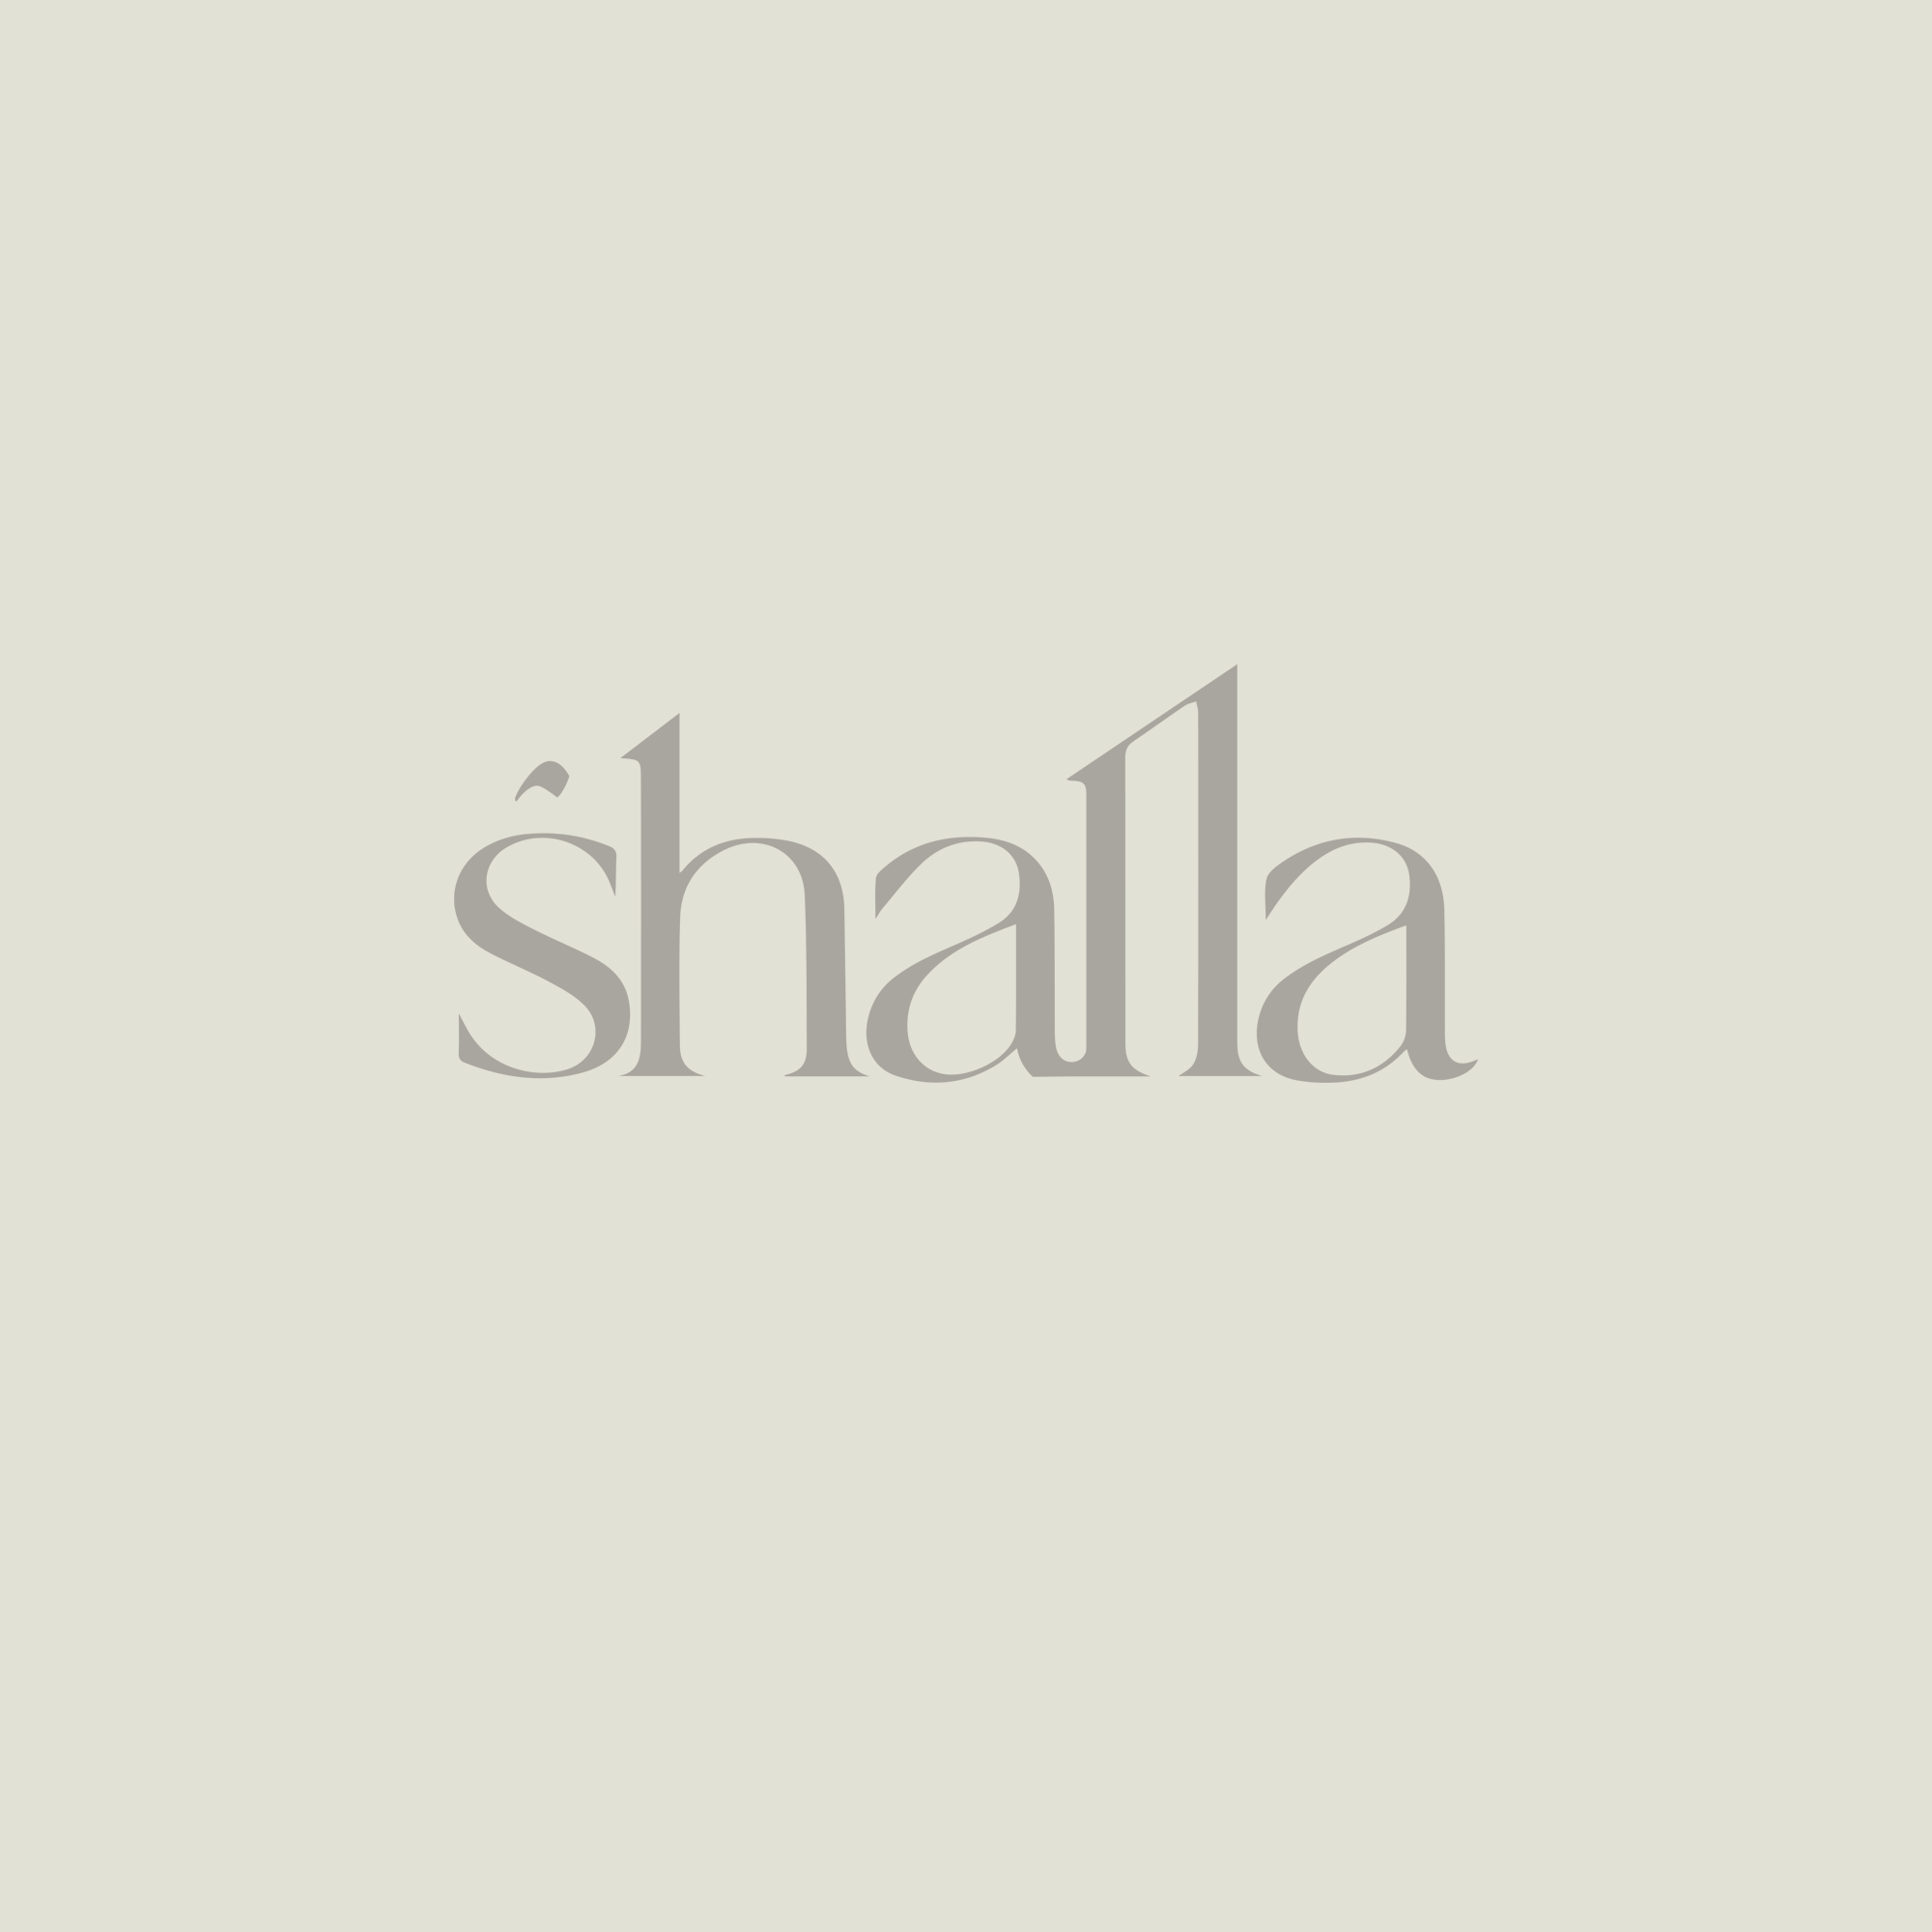 Shalla line